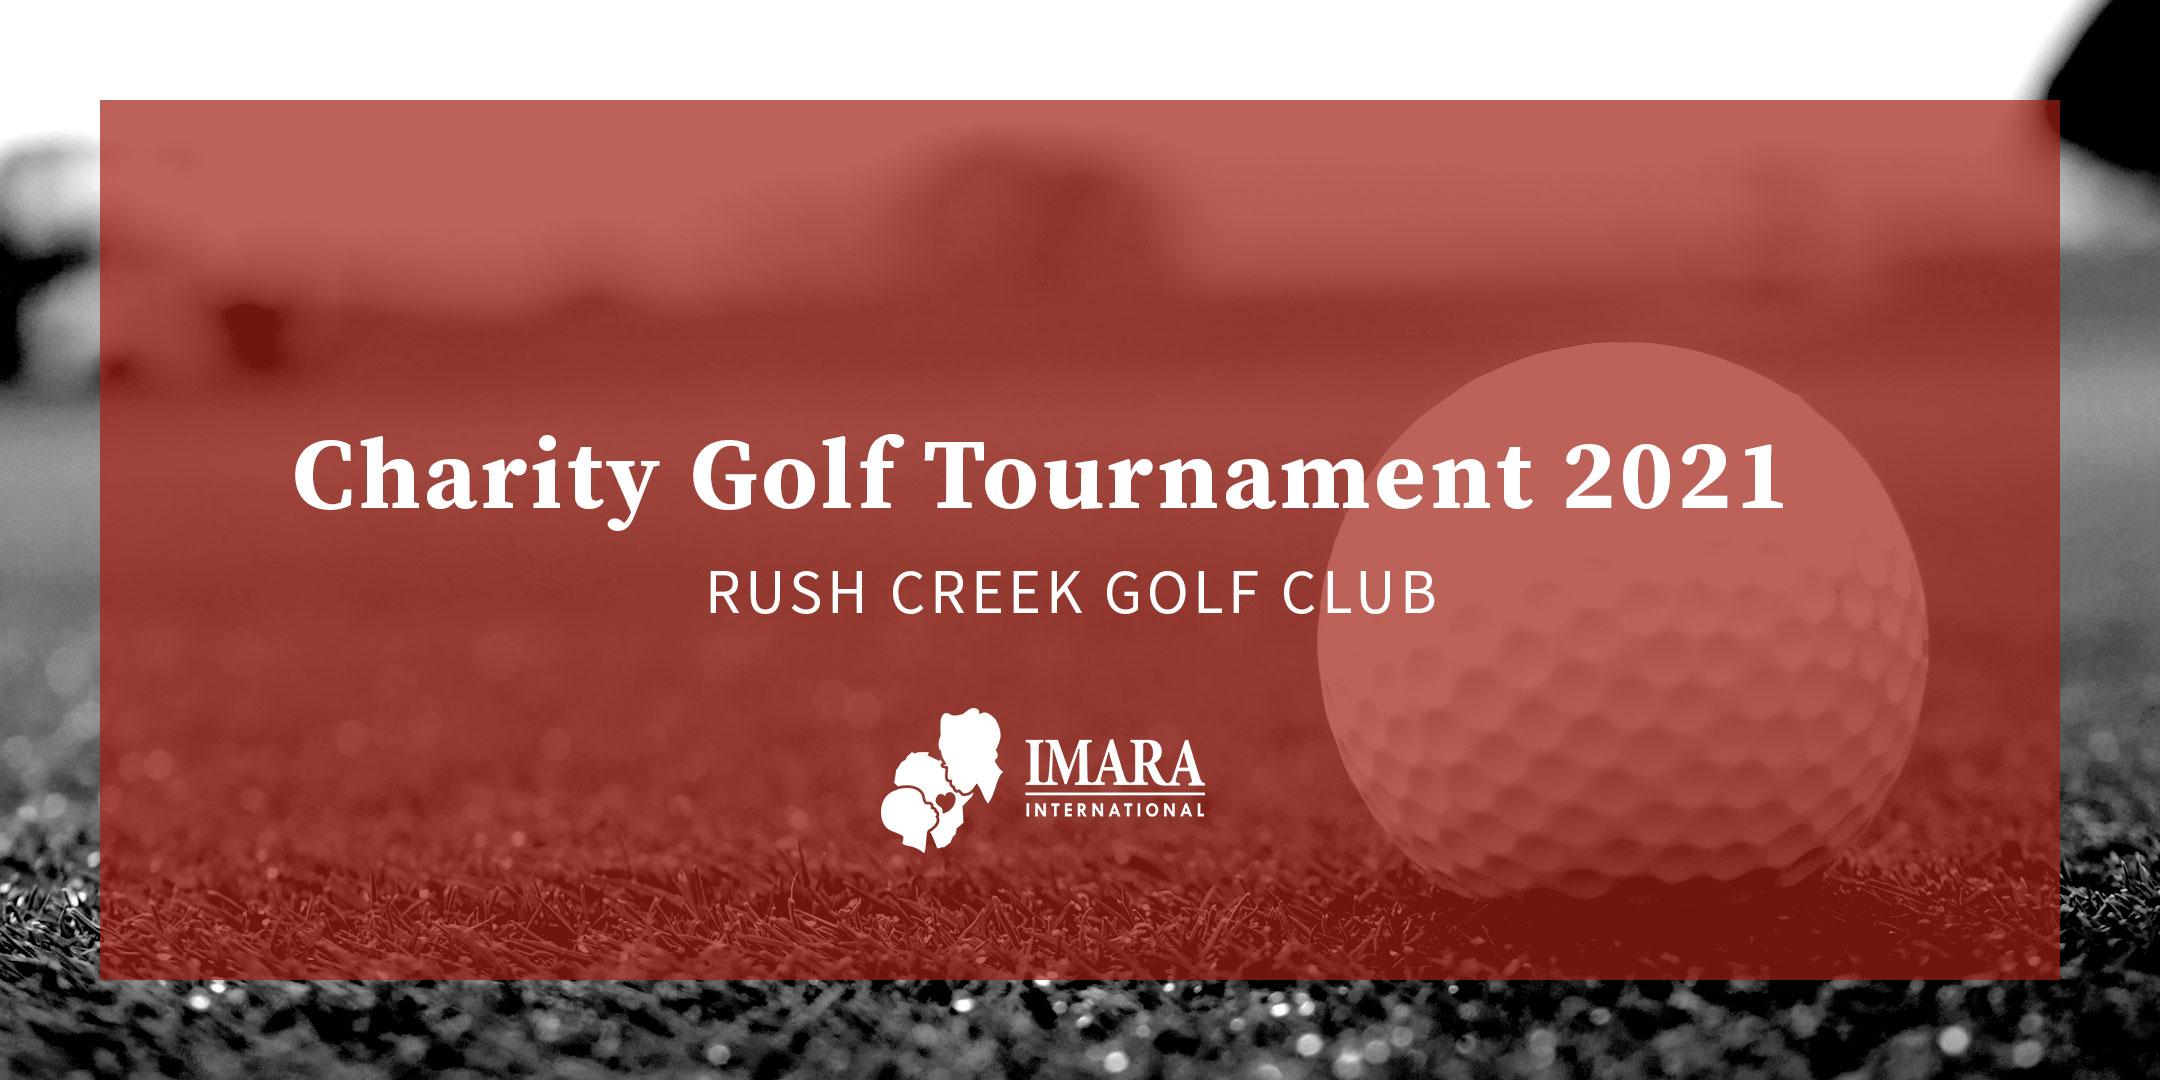 Imara Charity Golf Tournament 2021 - Rush Creek Golf Club